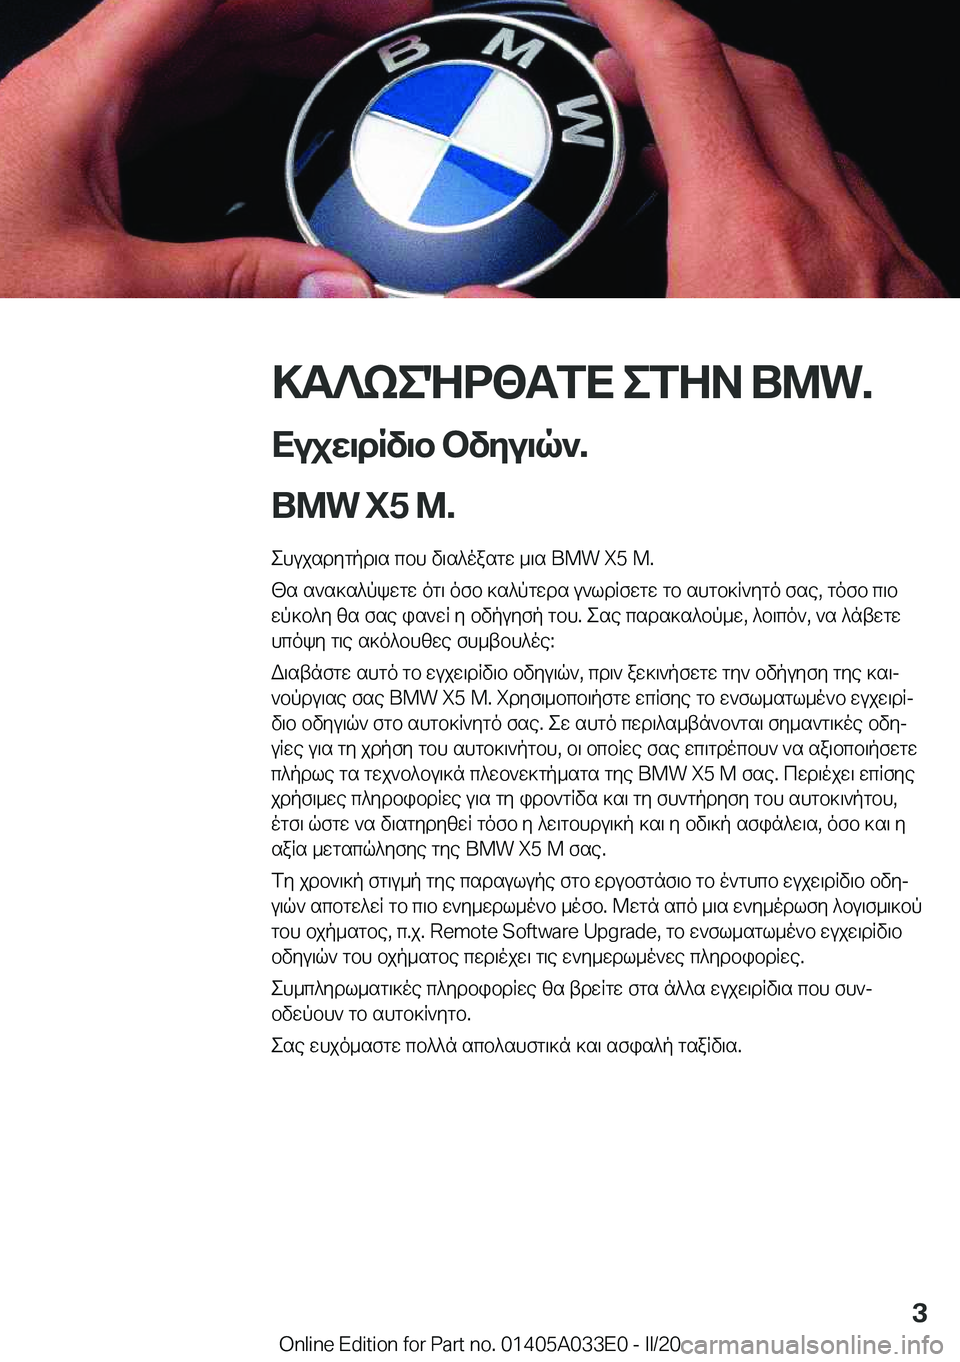 BMW X5 M 2020  ΟΔΗΓΌΣ ΧΡΉΣΗΣ (in Greek) >T?keNd<TfX�efZA��B�M�W�.
Xujw\dRv\b�bvyu\q`�.
�B�M�W��X�5��M�. ehujsdygpd\s�cbh�v\s^oasgw�_\s��B�M�W��X�5��M�.
[s�s`s]s^